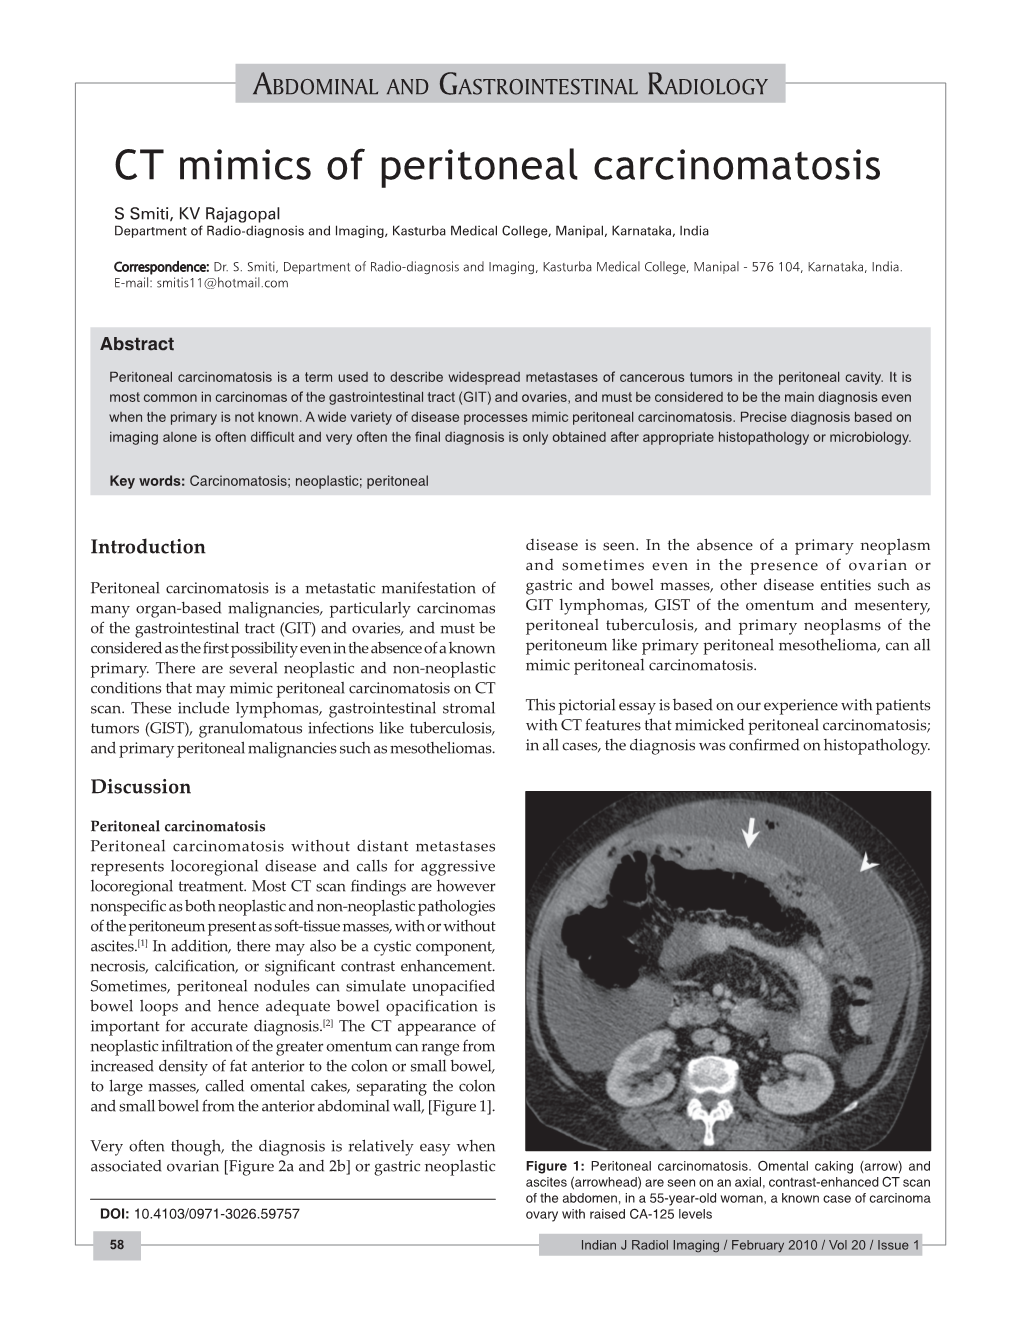 CT Mimics of Peritoneal Carcinomatosis